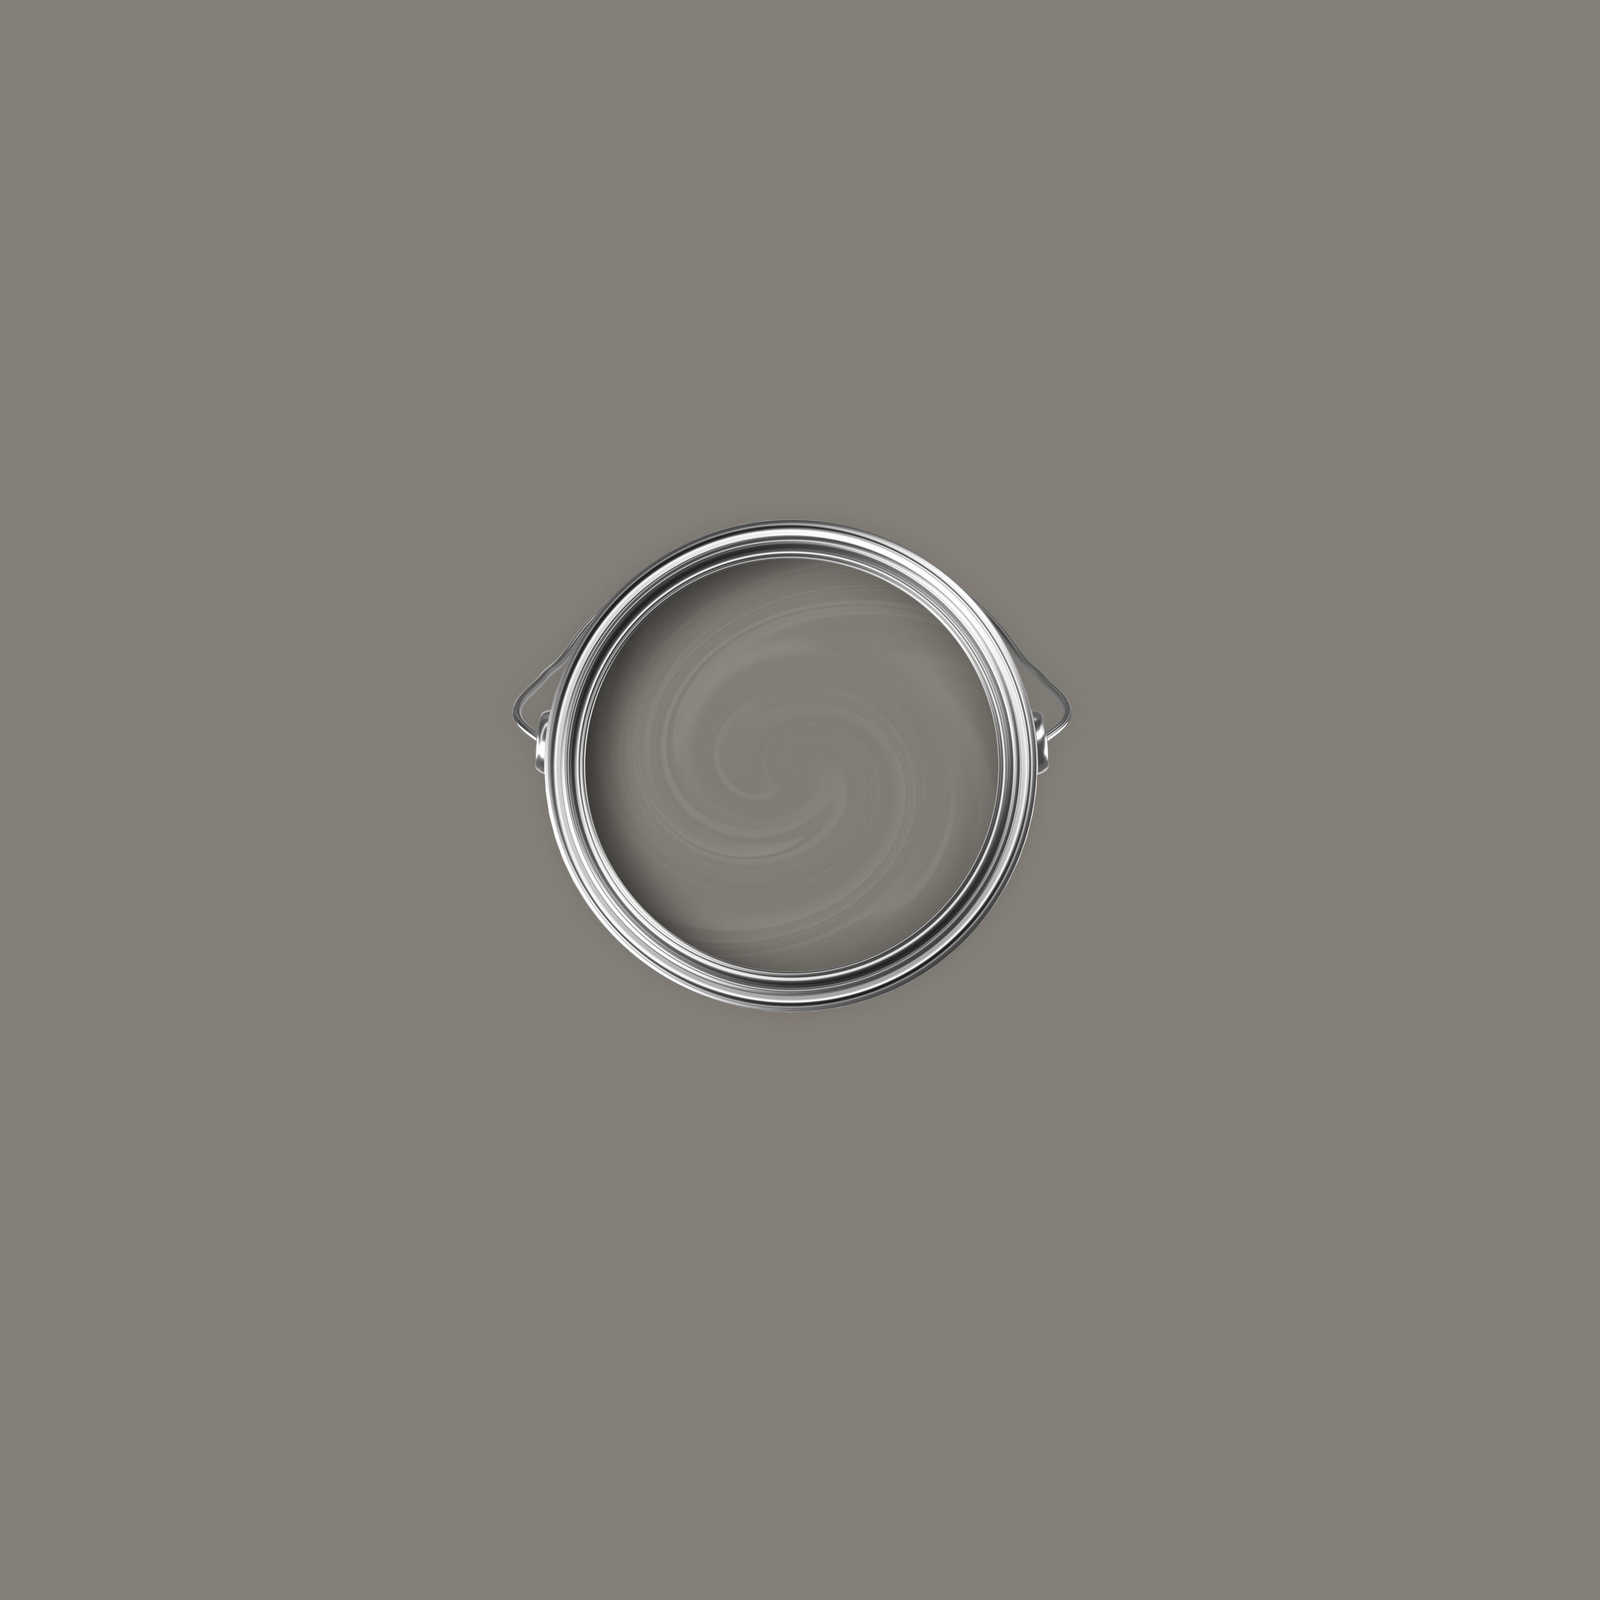             Premium Wandfarbe neutrales Betongrau »Creamy Grey« NW112 – 1 Liter
        